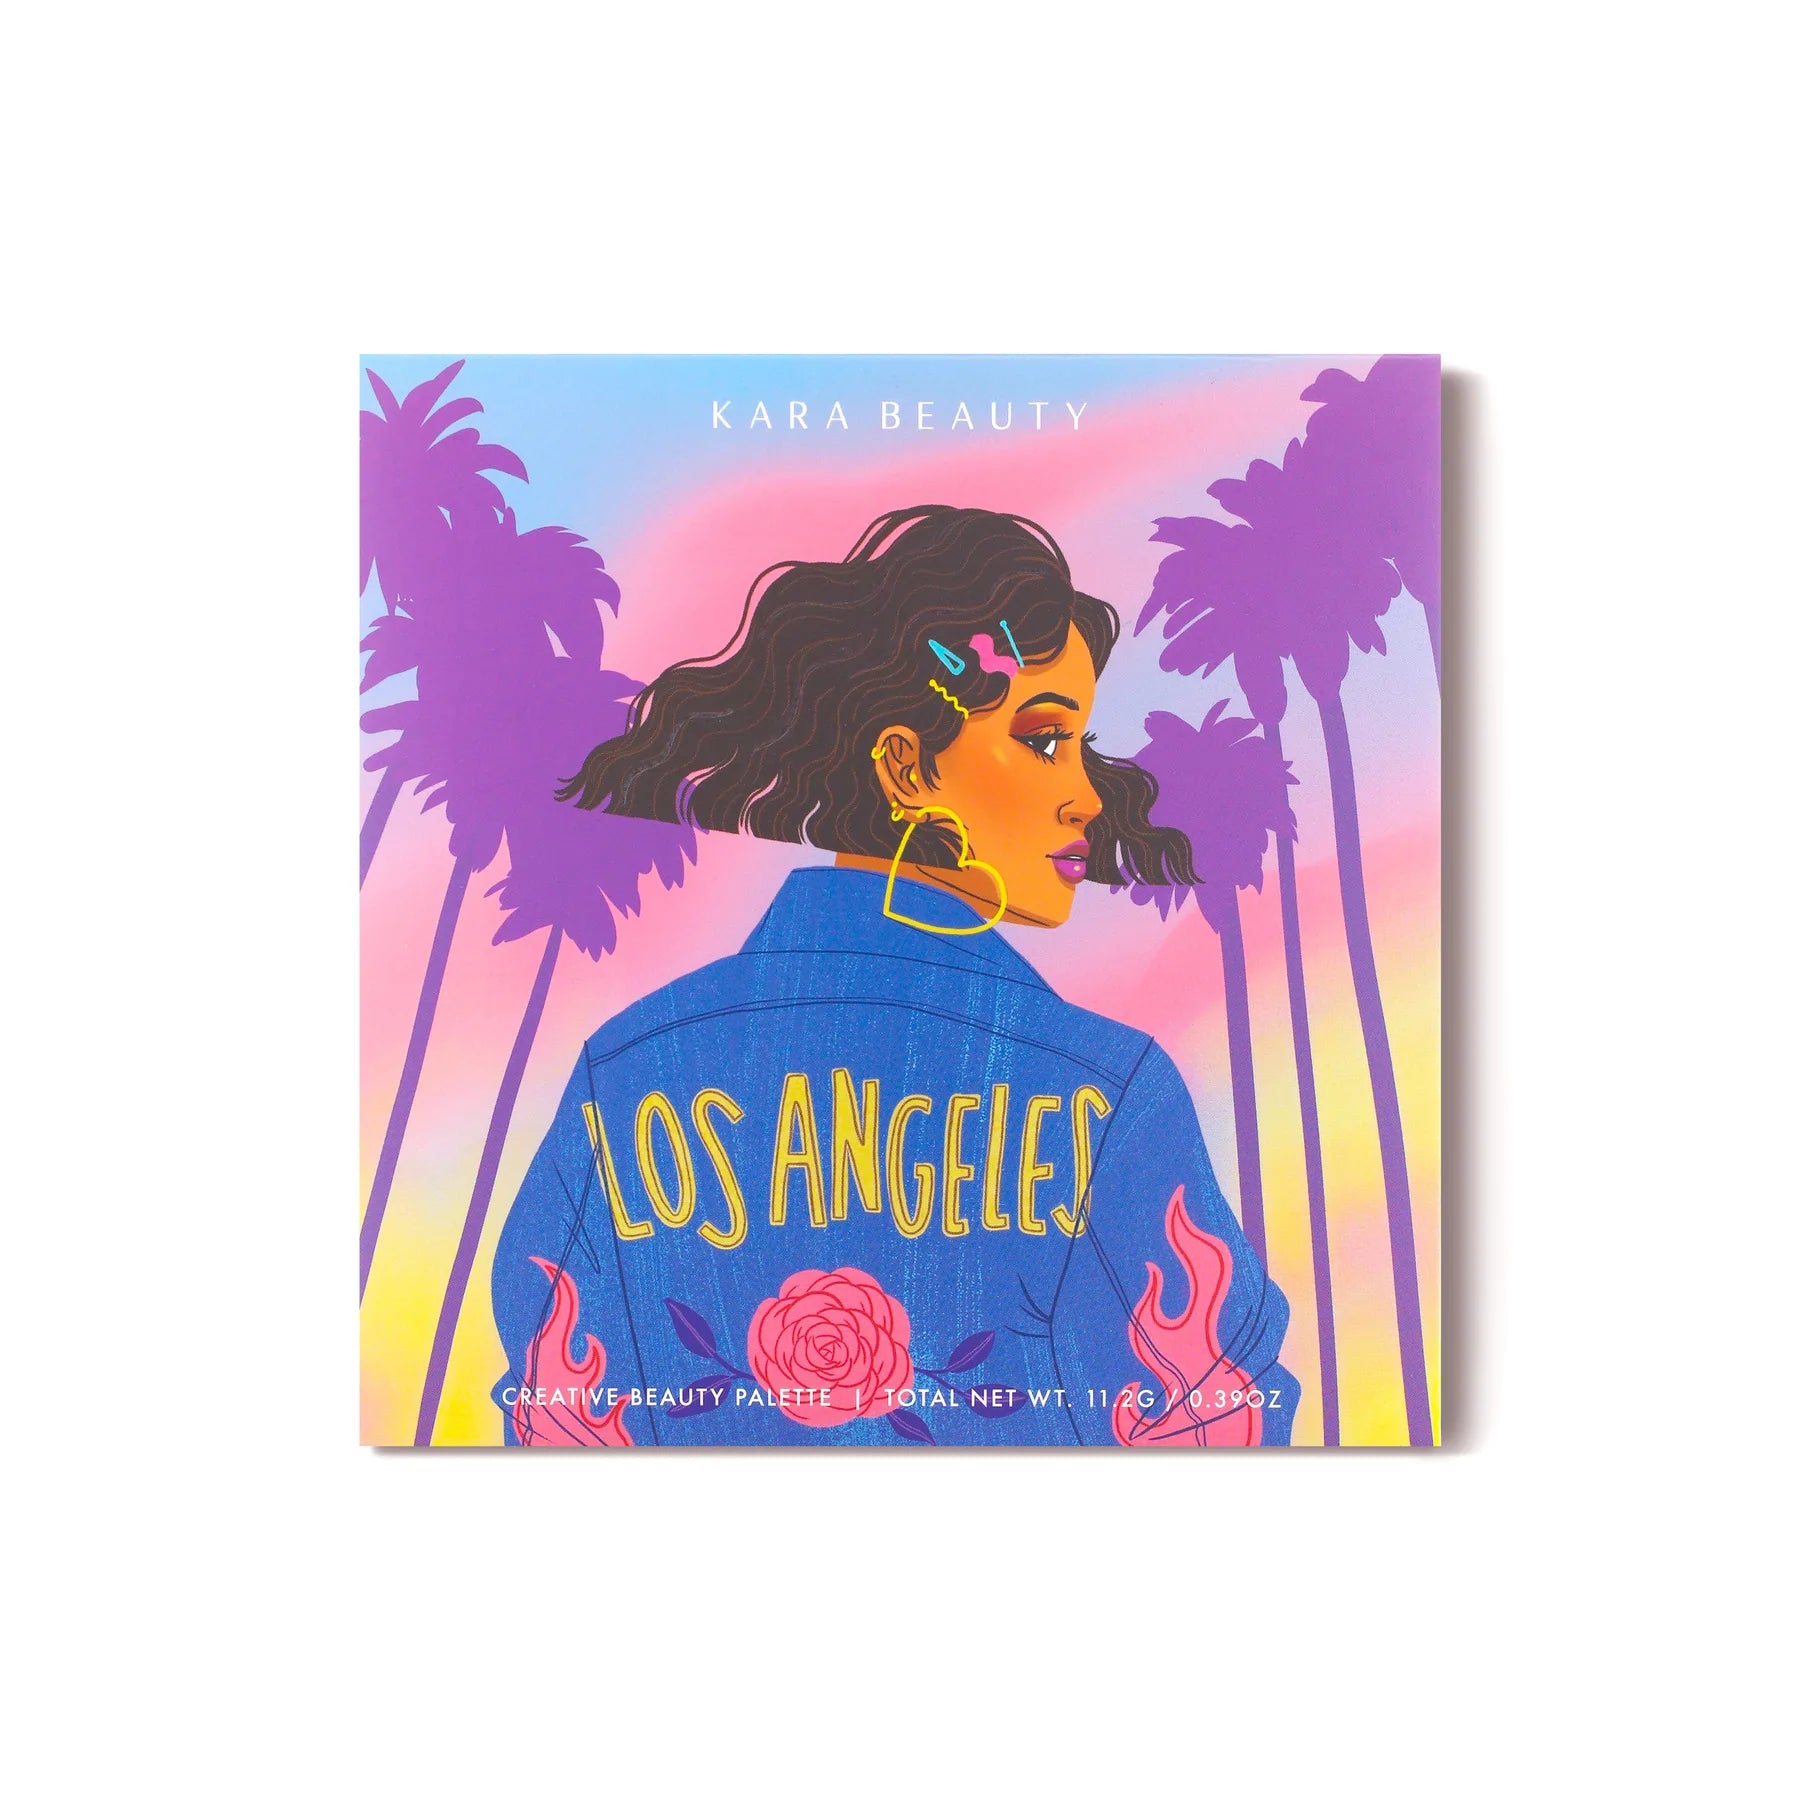 Kara Beauty - Los Angeles Palette